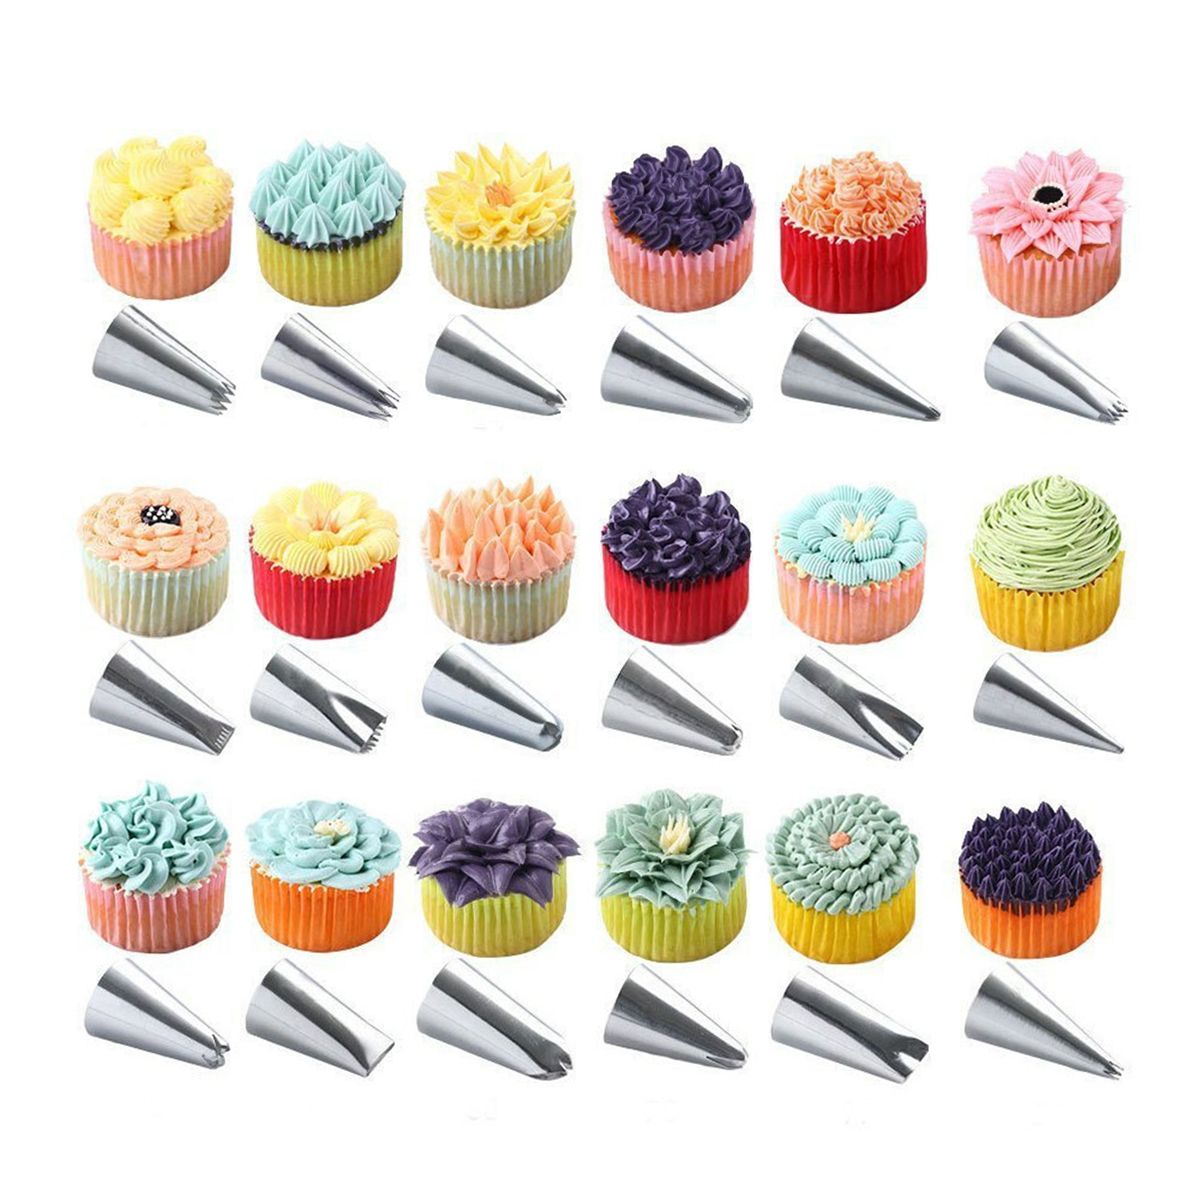 45PcsSet-Cake-Turntable-Rotating-Rack-Knife-Pastry-Nozzle-Decor-DIY-Baking-Tool-1718388